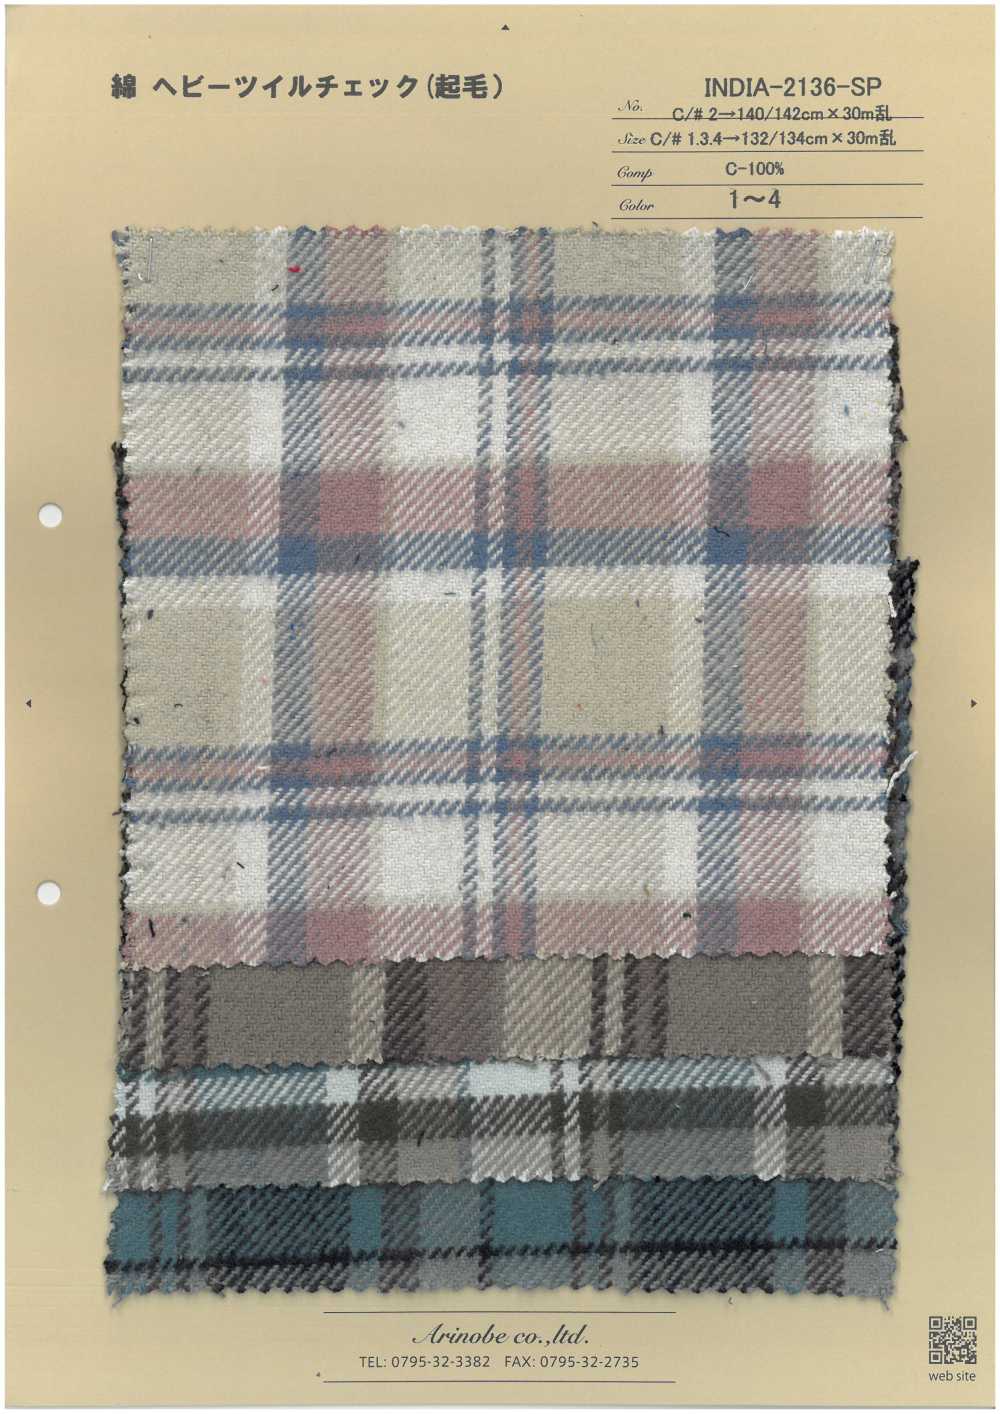 INDIA-2136-SP Cuadros De Sarga Gruesa De Algodón (Fuzzy)[Fabrica Textil] ARINOBE CO., LTD.